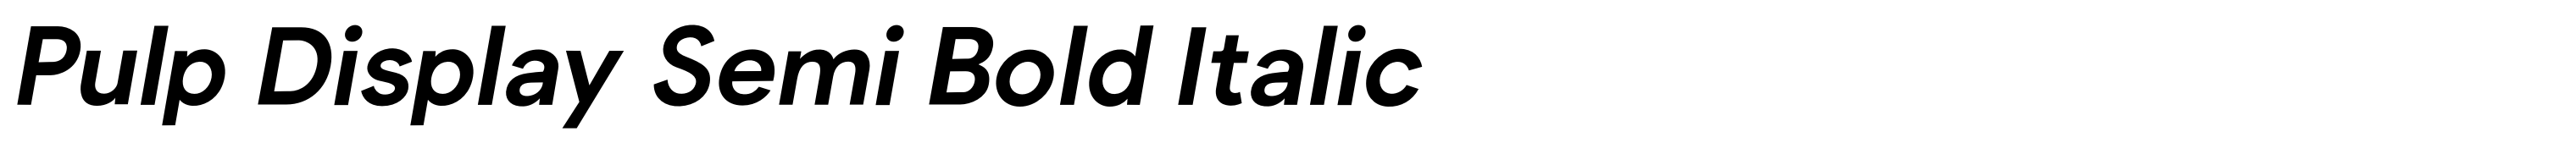 Pulp Display Semi Bold Italic